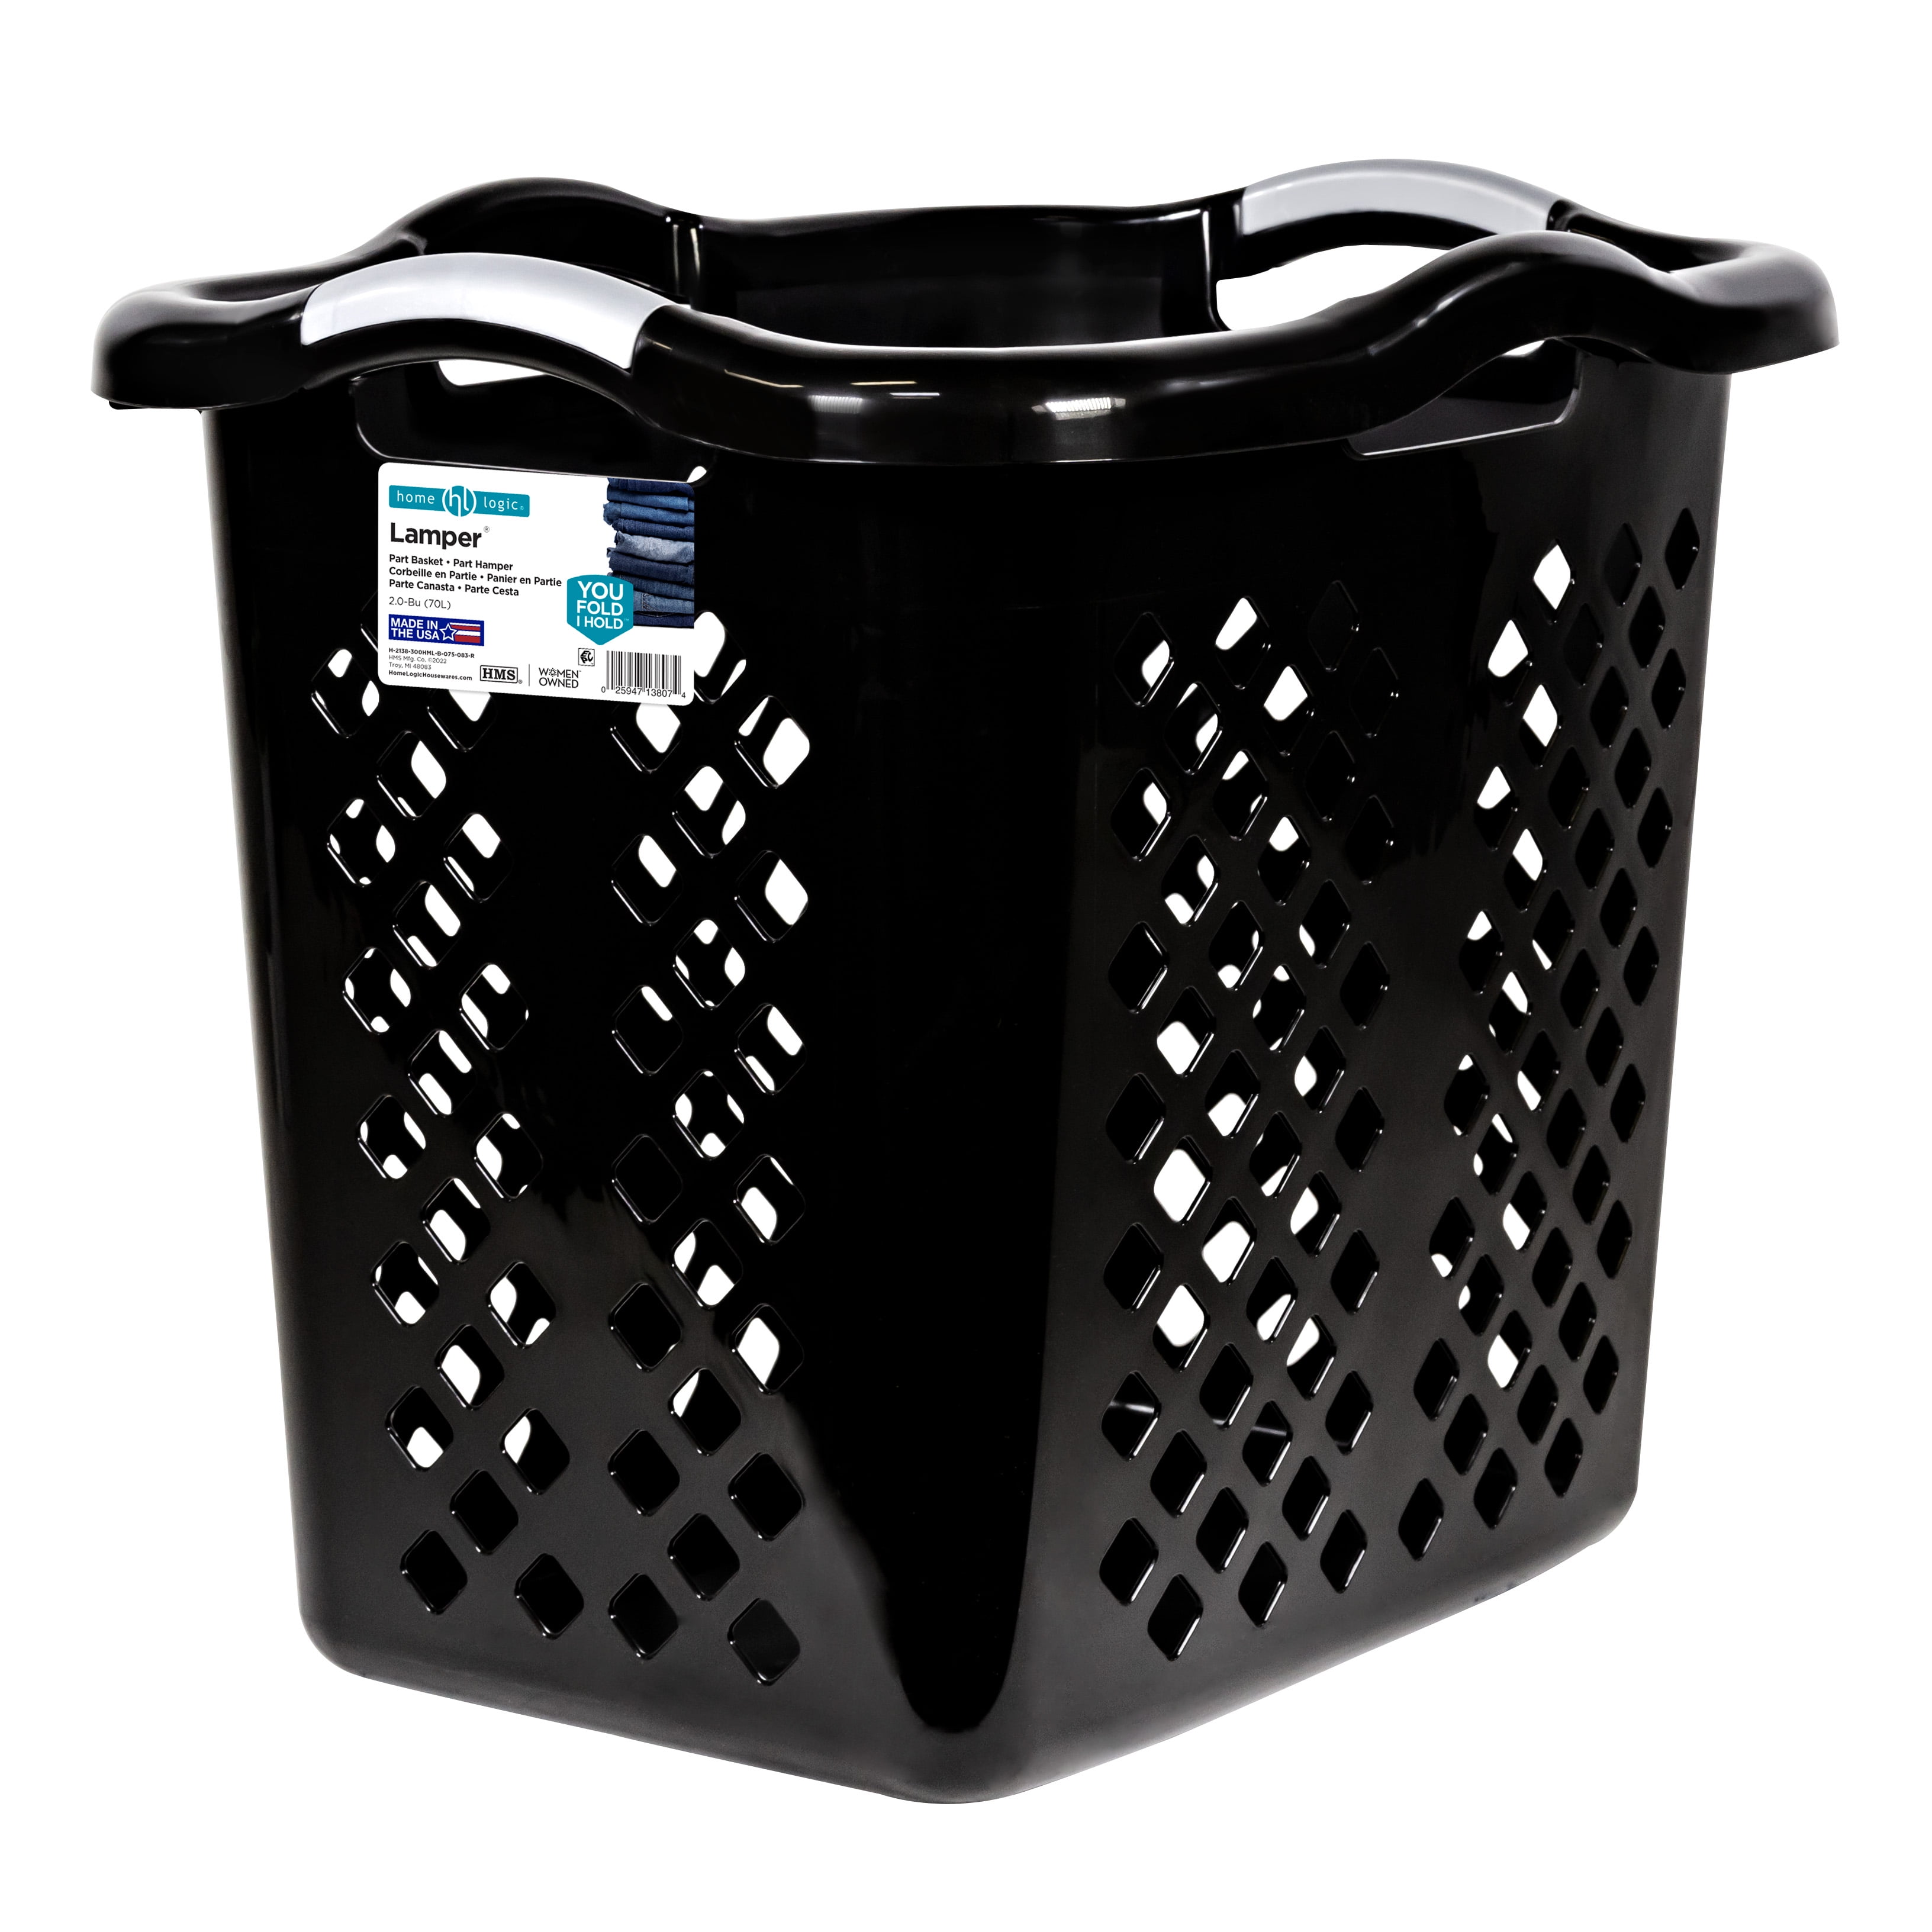 Home Logic 2 Bushel Lamper Plastic Laundry Basket with Silver Handles